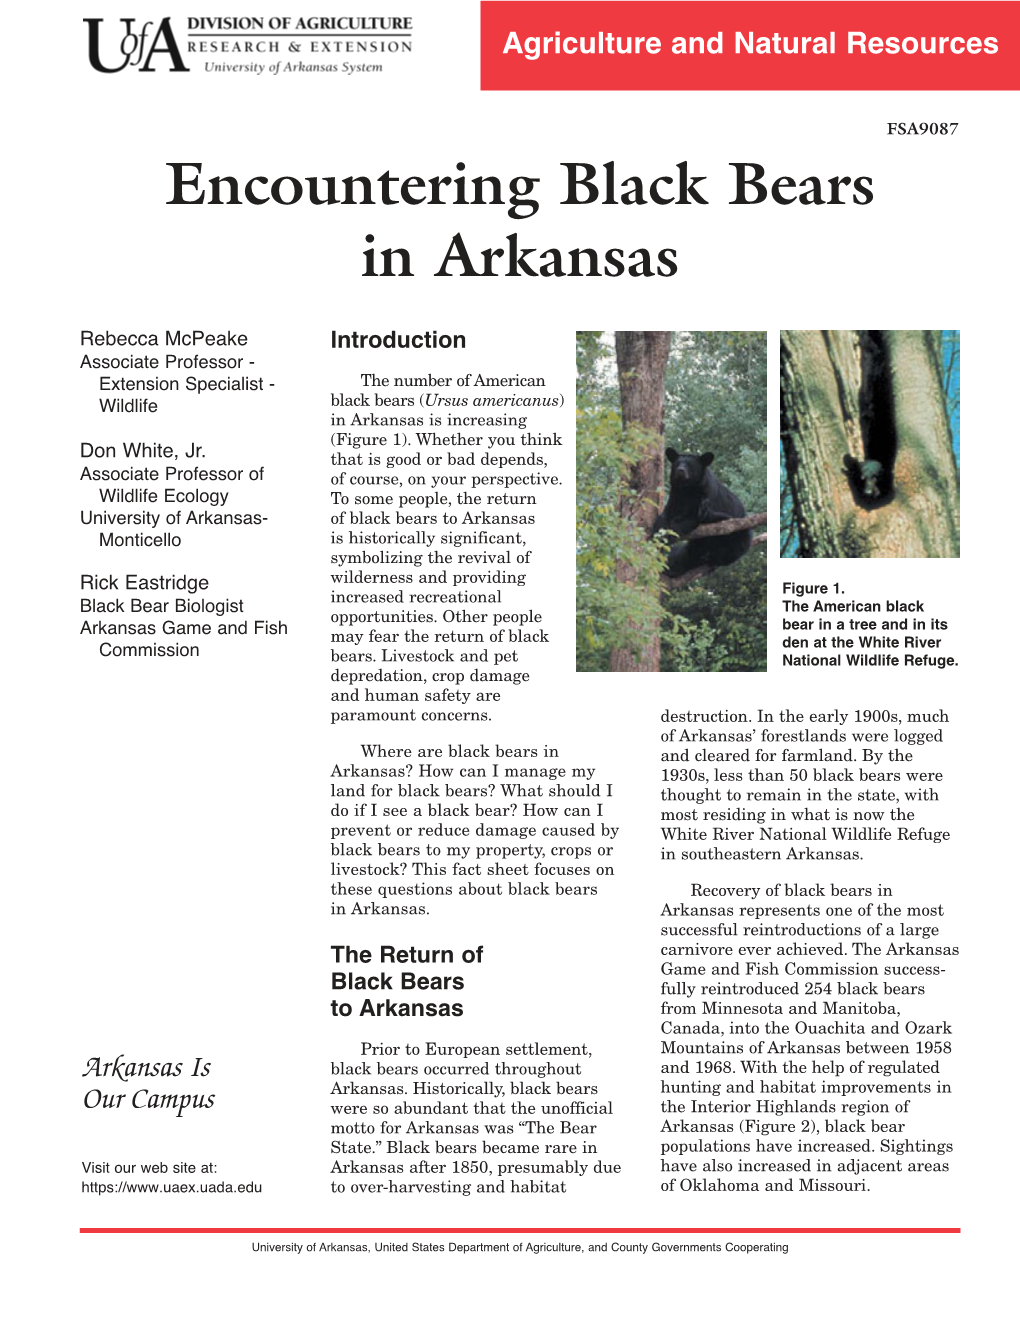 Encountering Black Bears in Arkansas